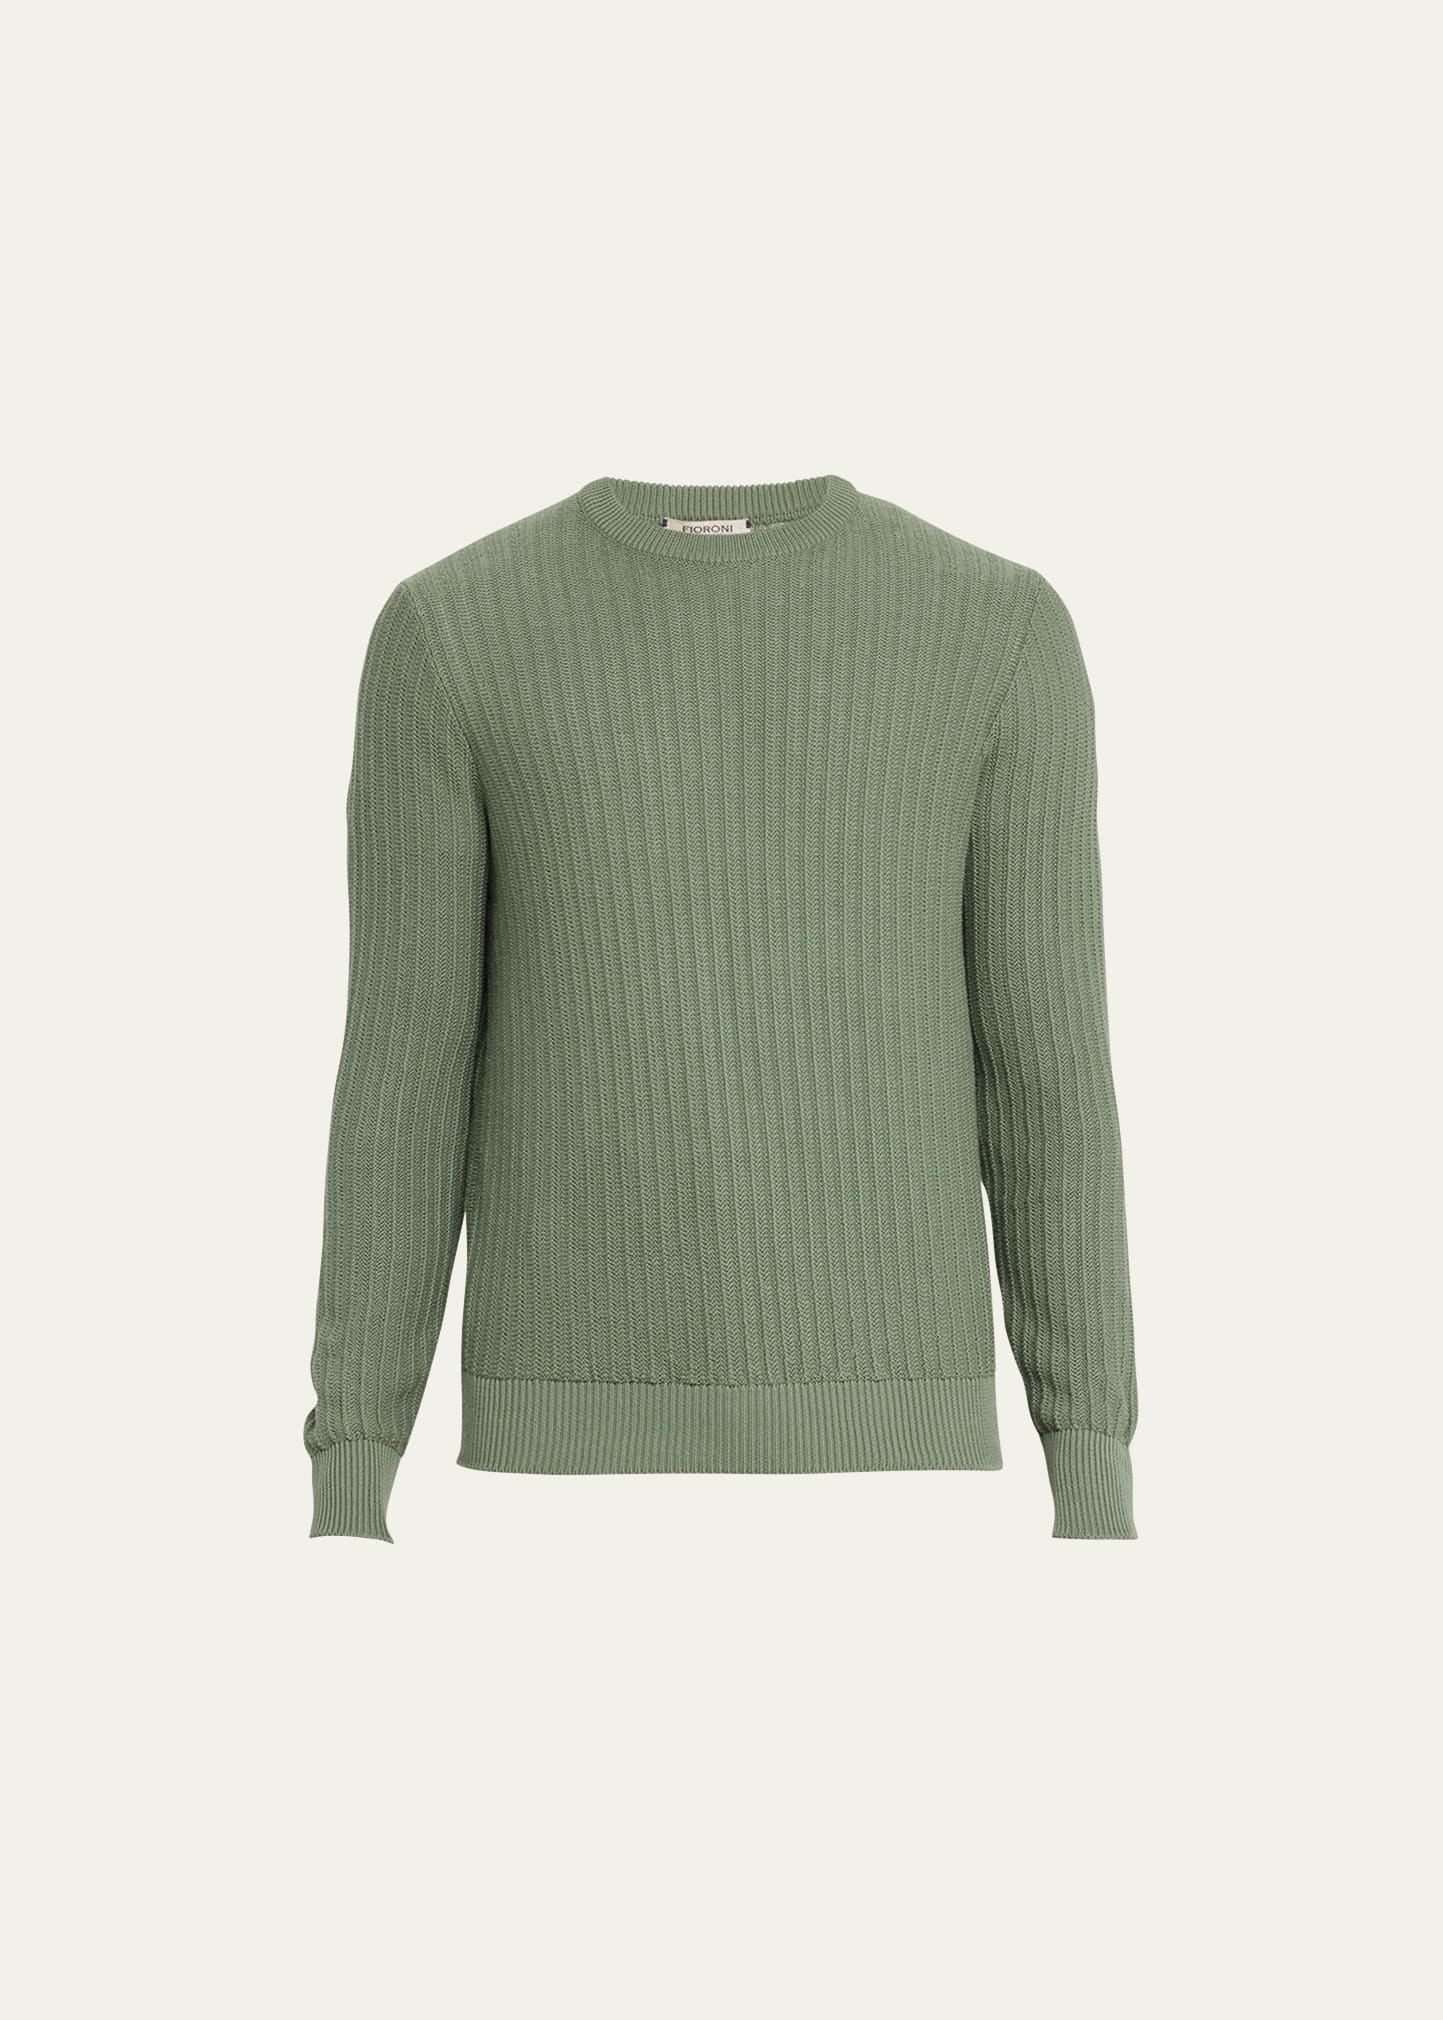 Fioroni Men's Cotton-Cashmere Crewneck Sweater